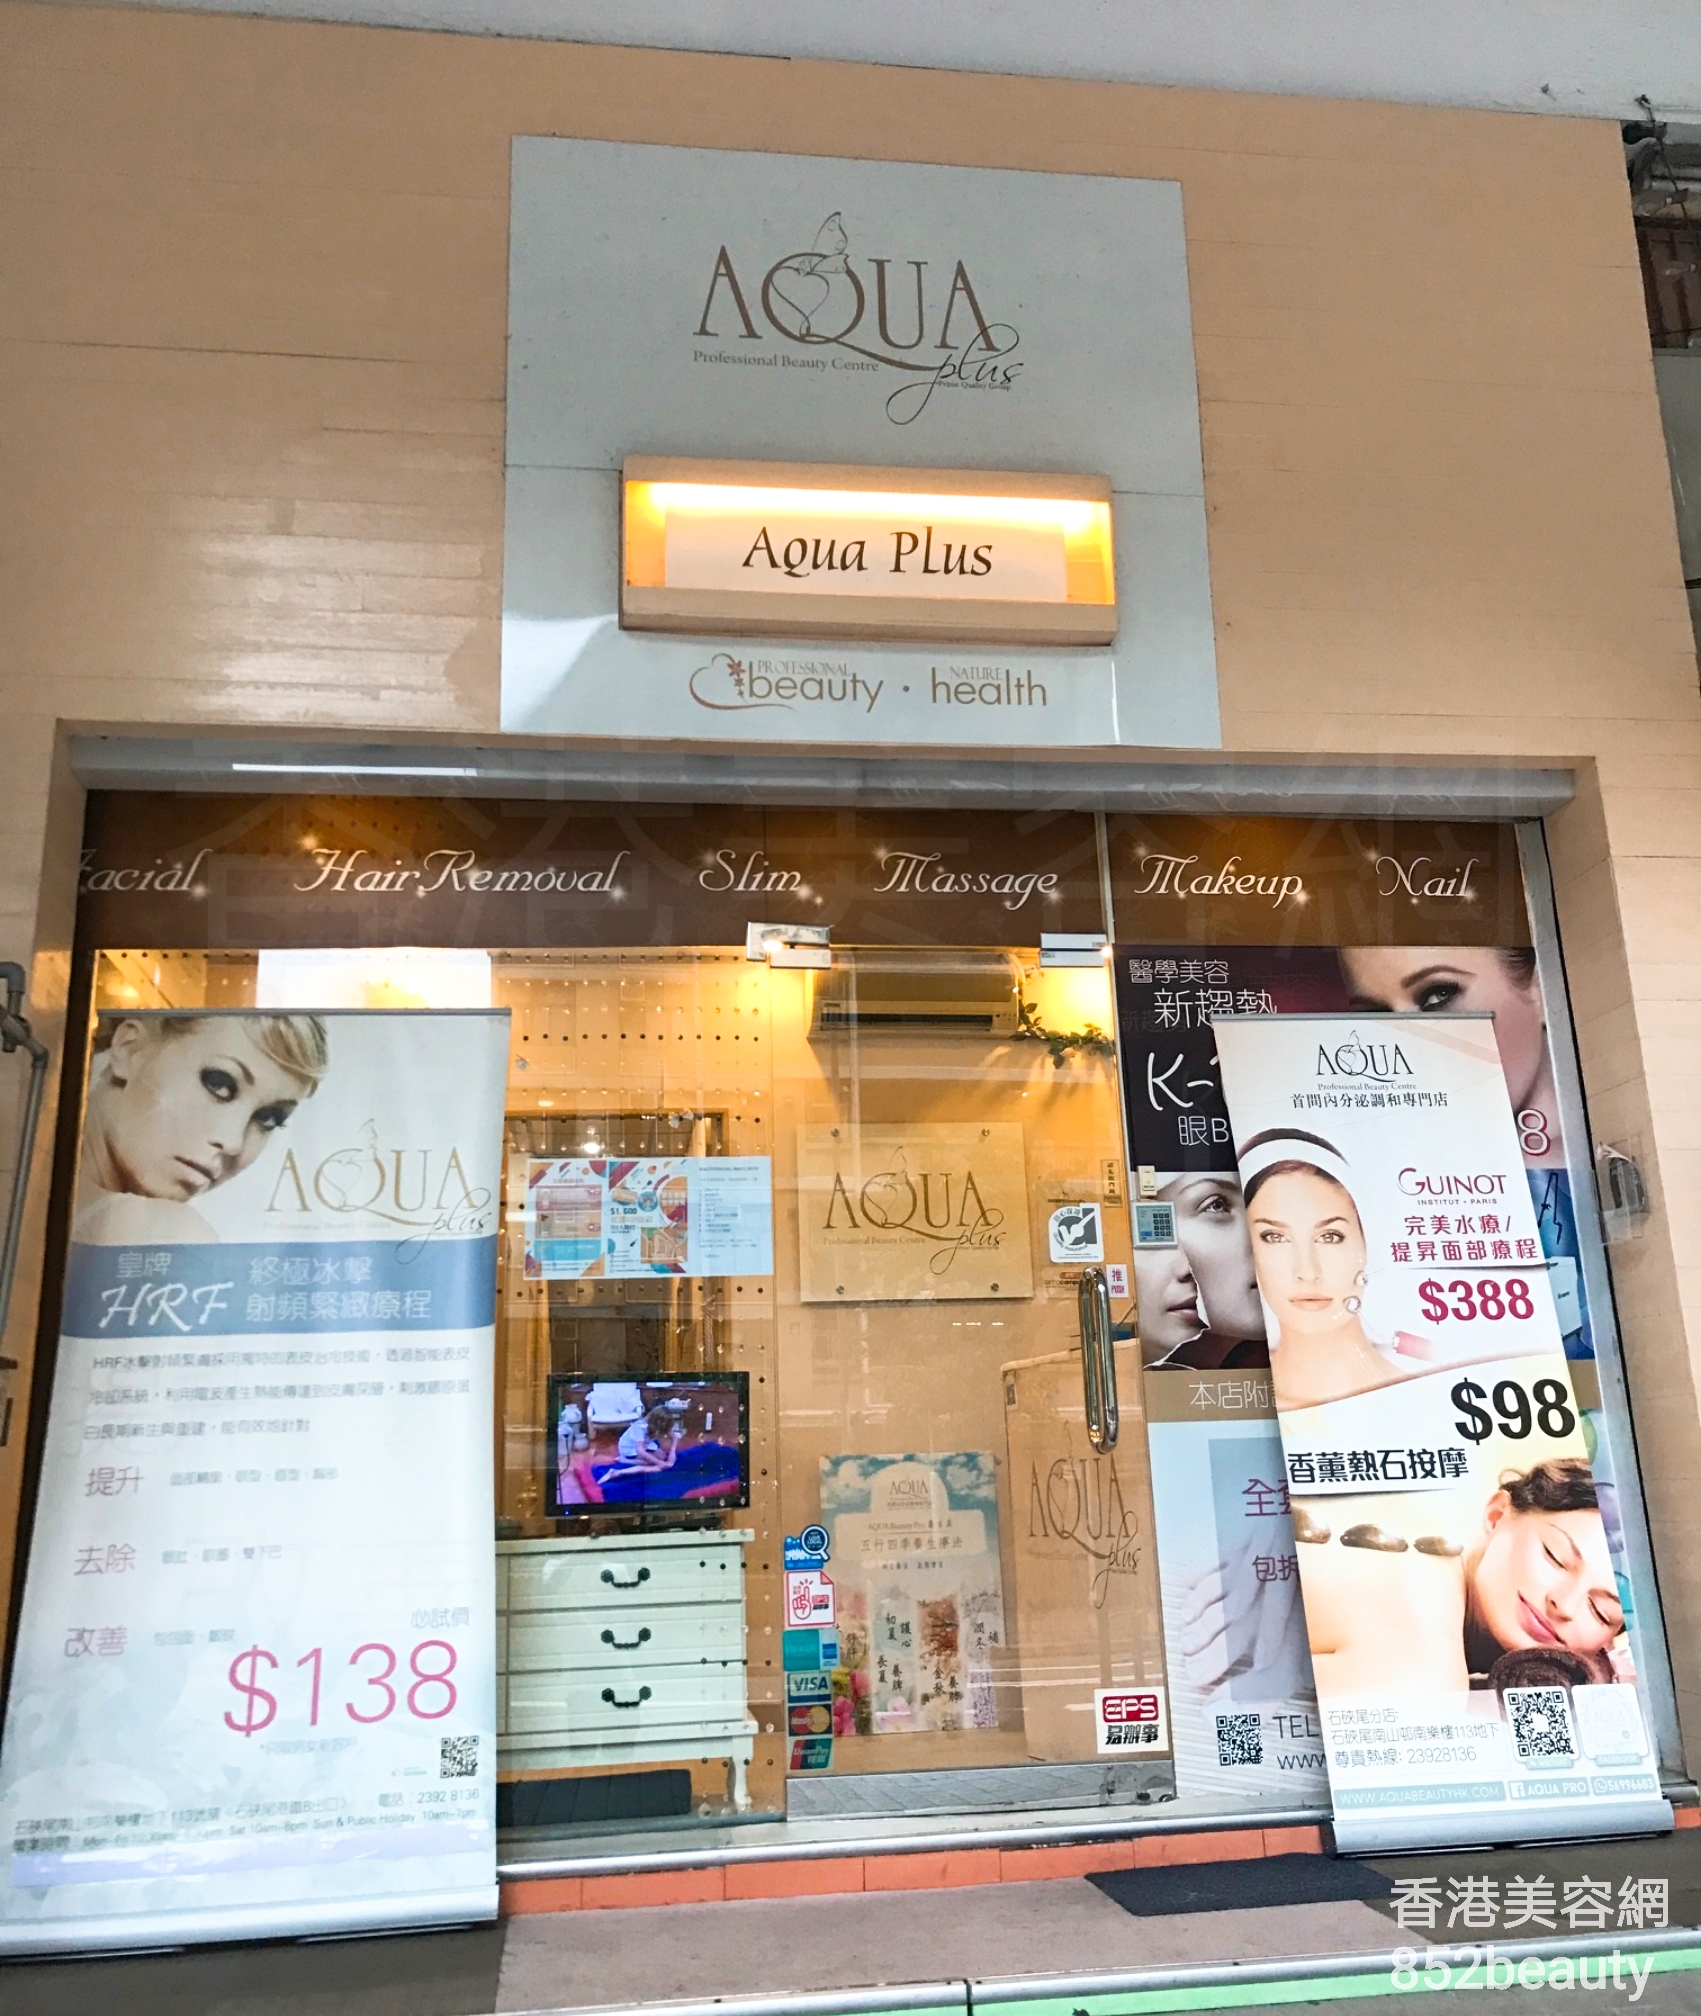 眼部護理: AQUA Professional Beauty Centre (石硤尾分店)